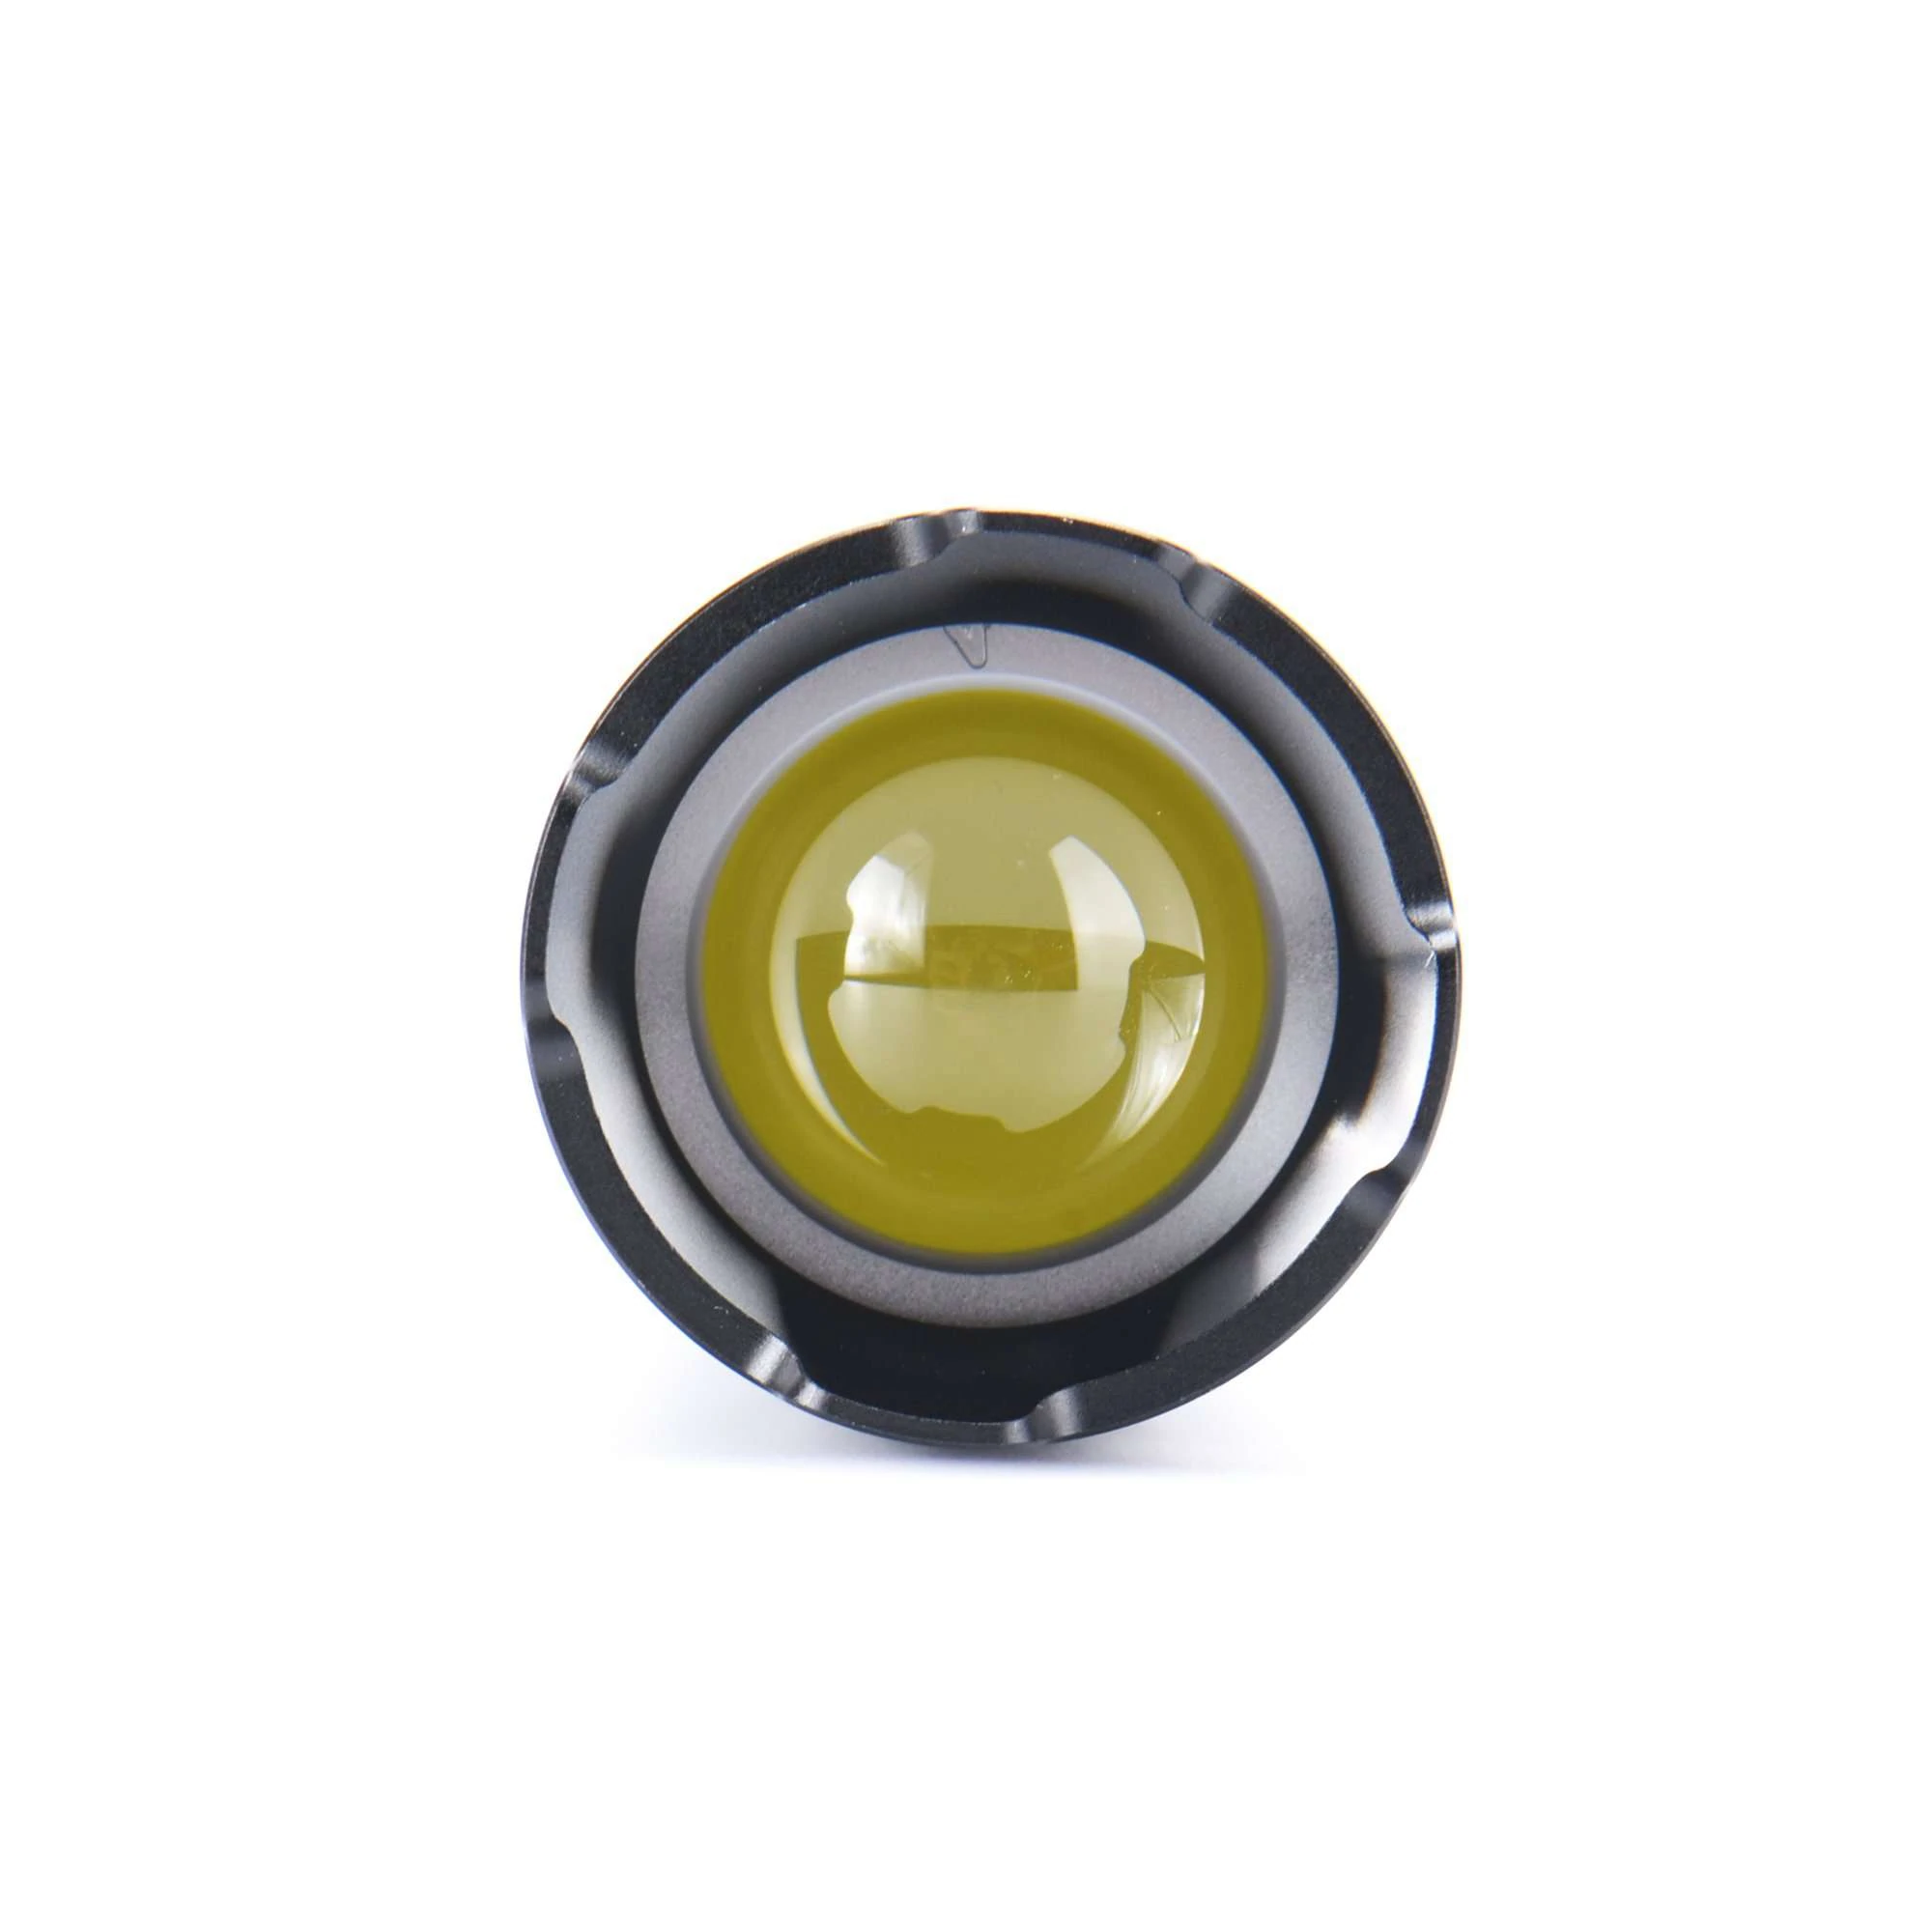 Wuben LT35 Pro Zoomable  XPL2-V6 LED 1200 Lumens 18650 Battery Search Light